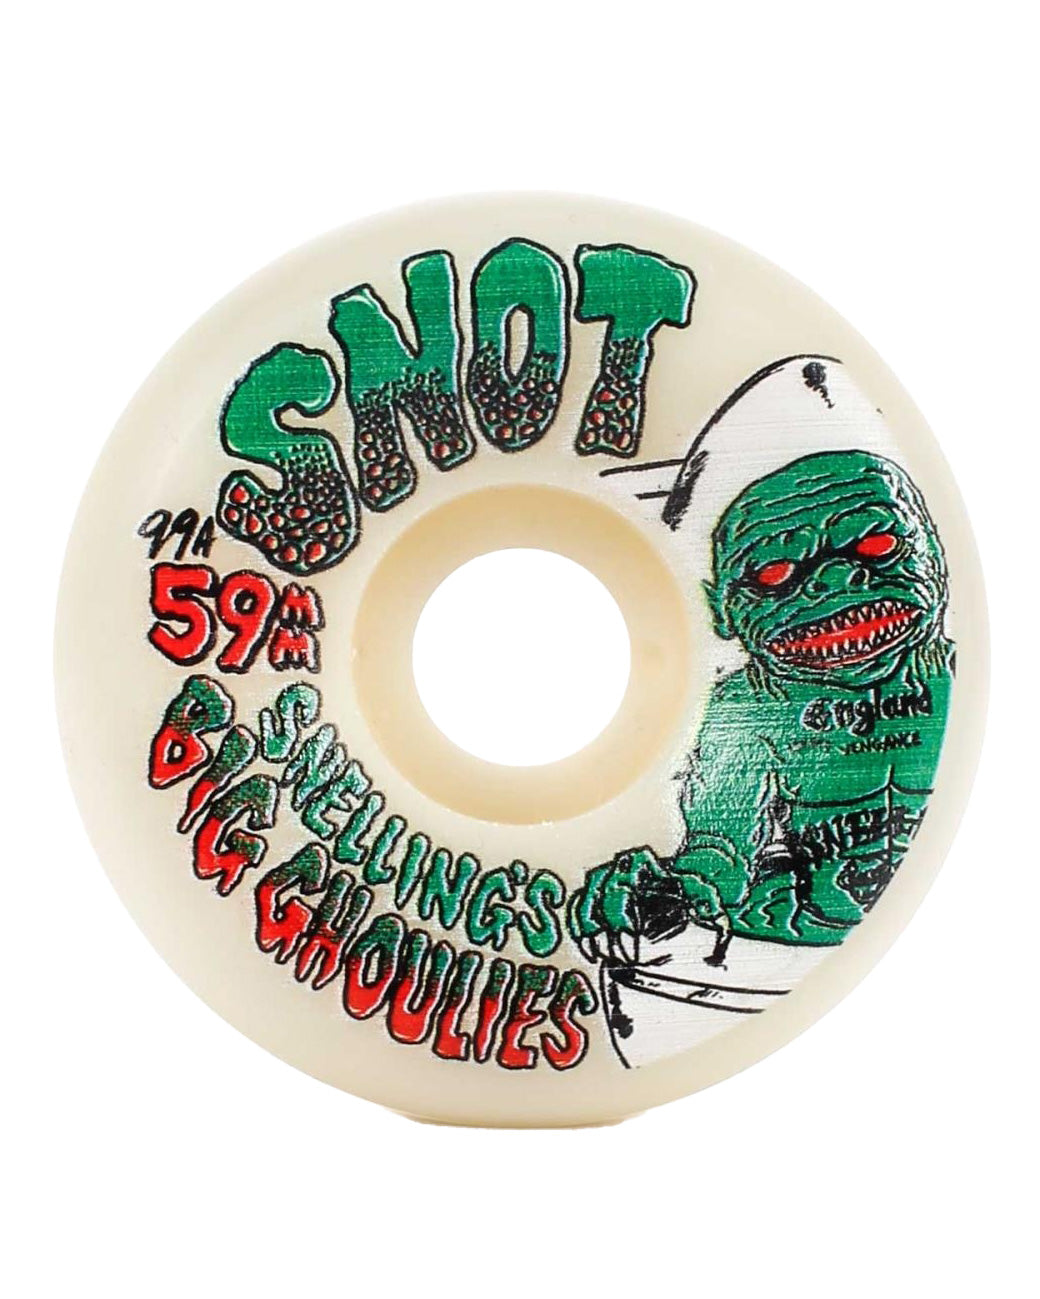 "Snot Snelling Big Ghoulies" Glow | Wheels